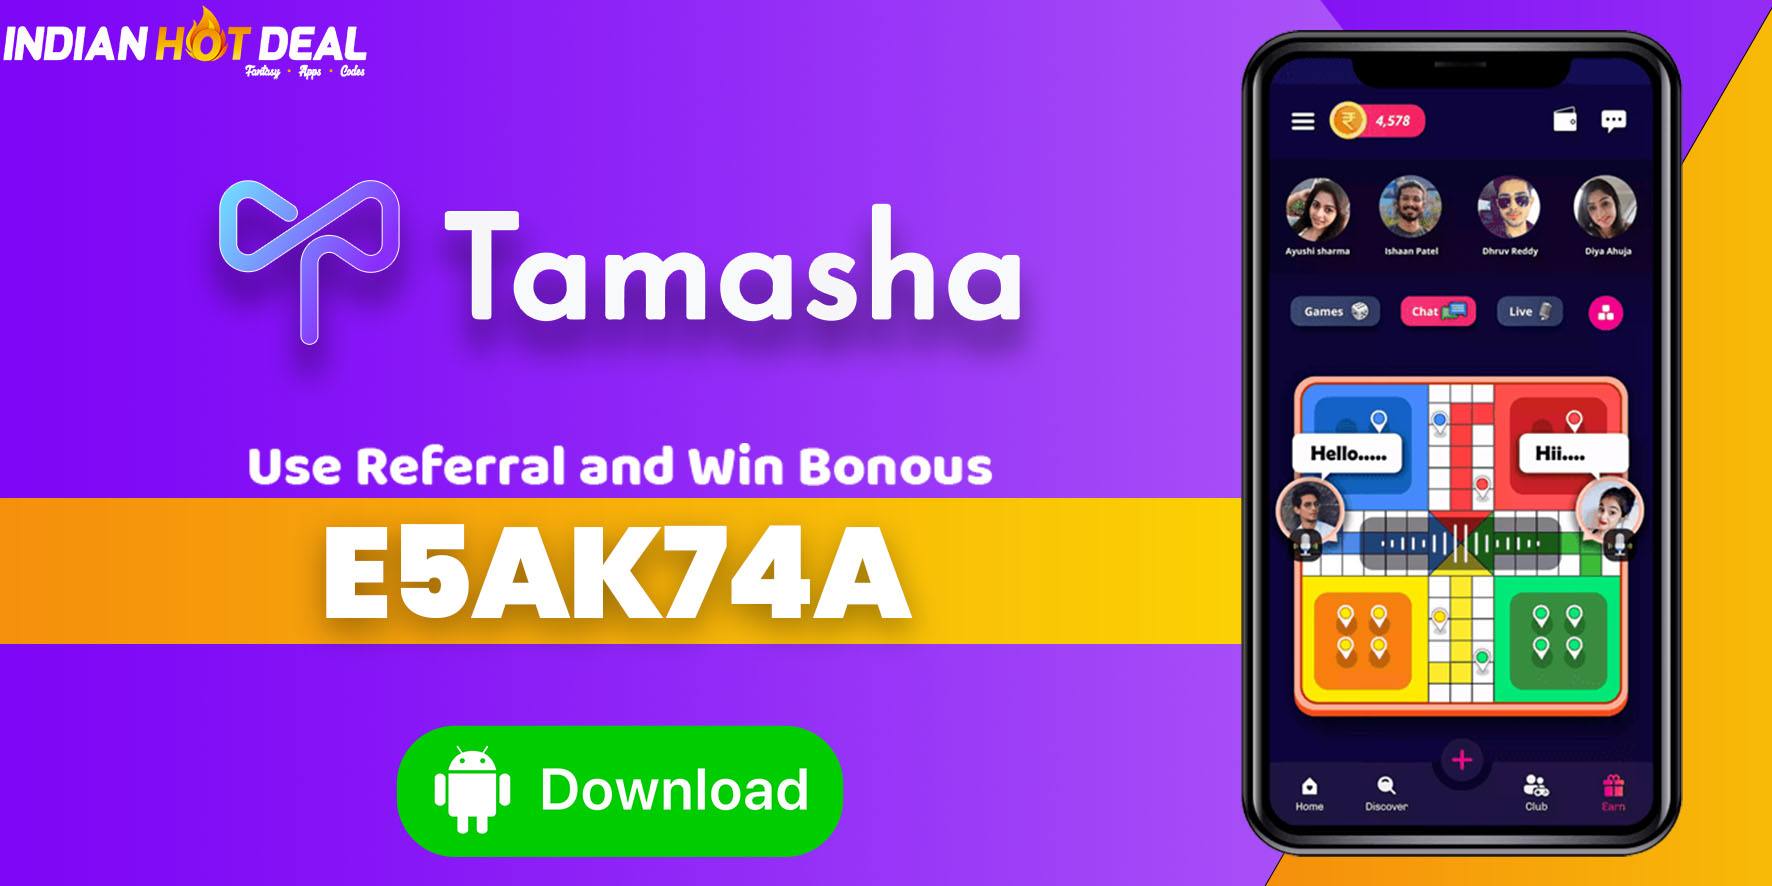 Tamasha Referral Code: E5AK74A -Get Rs.100 FREE